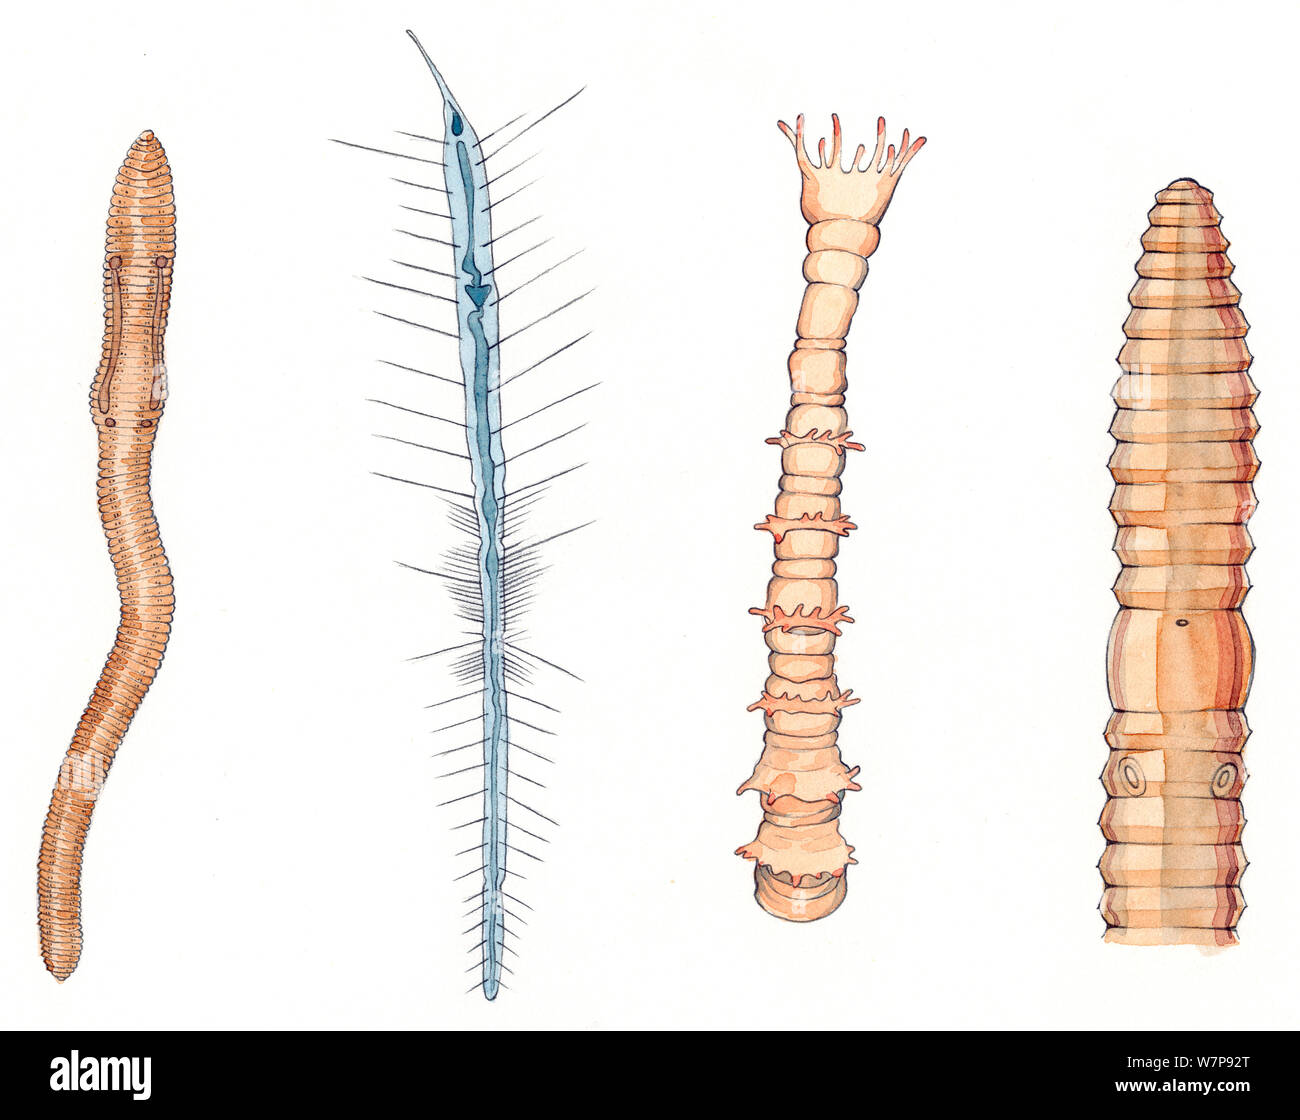 Left to right: Earthworm (Lumbricus terrestris). Planktonic polychaete worm (Tomopteris), Mercierella polychaete tube worm (Ficopomatus enigmaticus), detail of Earthworm (Lumbricus terrestris) anterior. Pencil and watercolor painting. Stock Photo